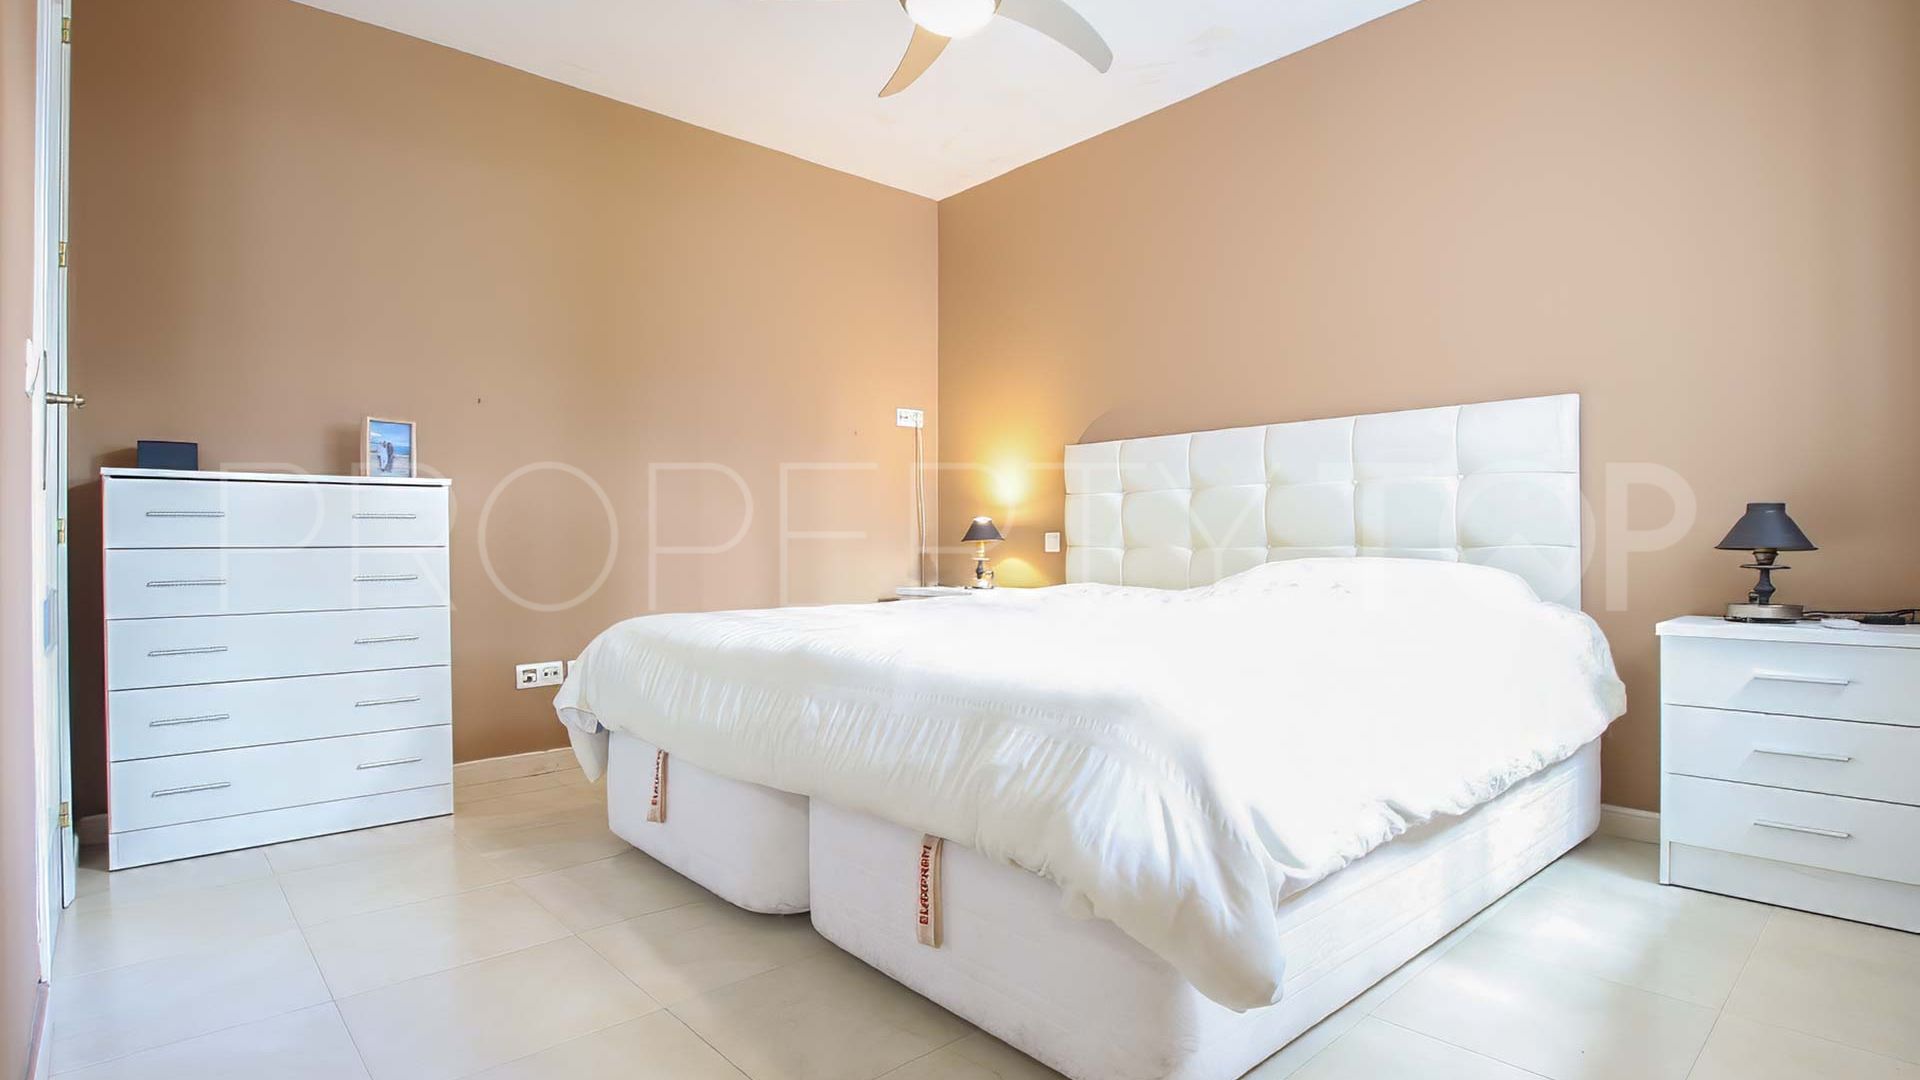 3 bedrooms ground floor apartment in Marbella - Puerto Banus for sale